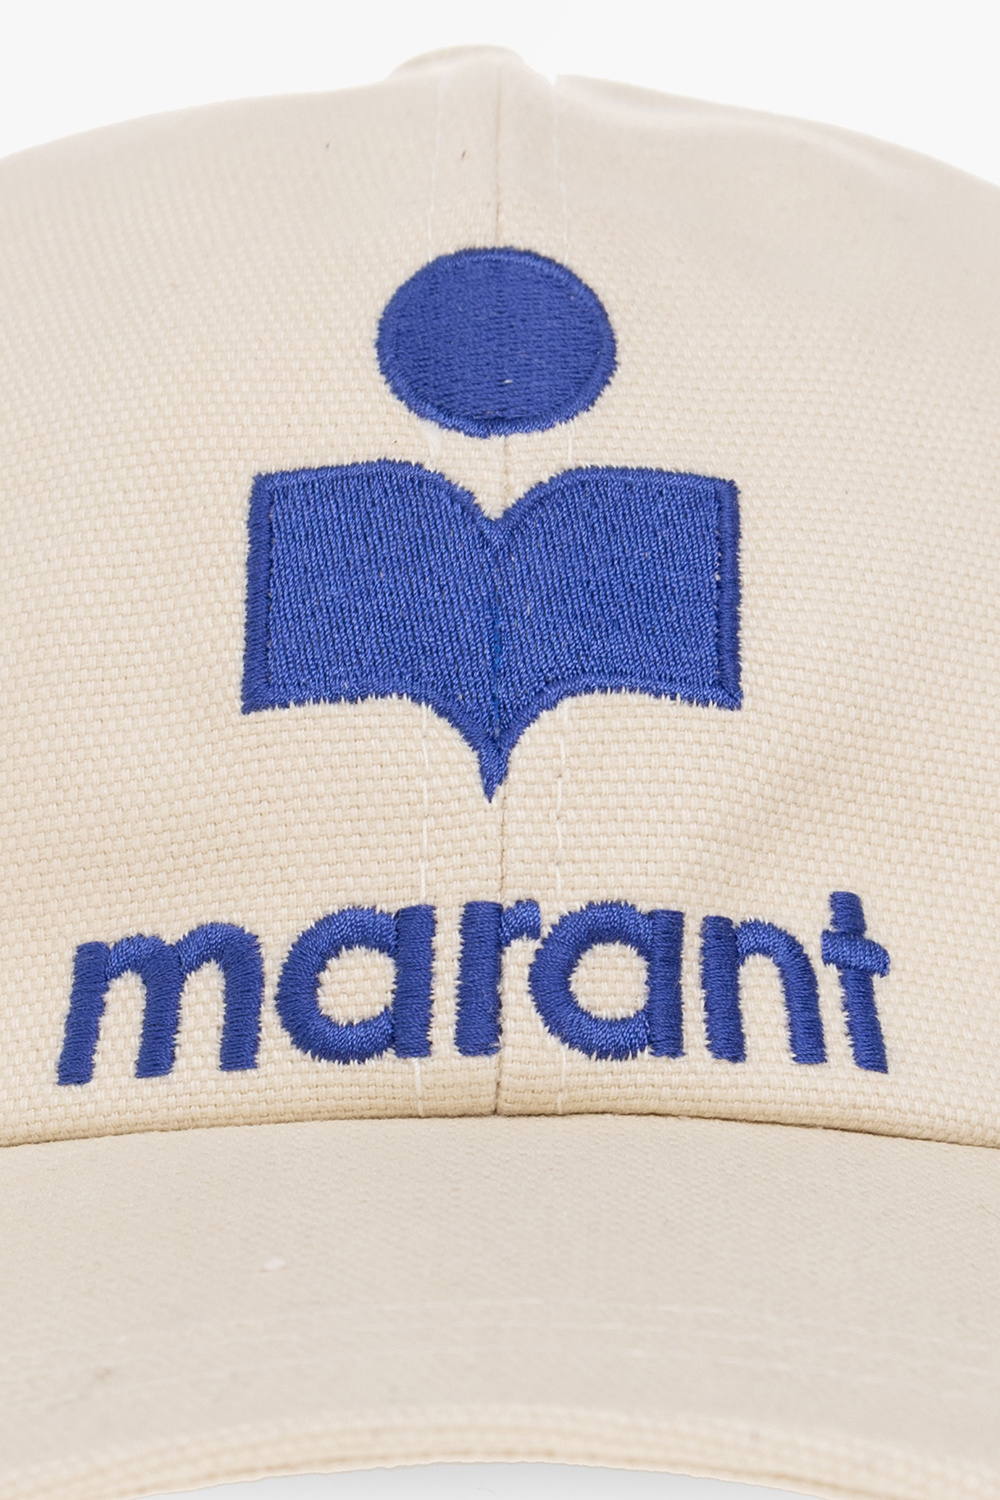 MARANT ‘Tyron’ baseball cap